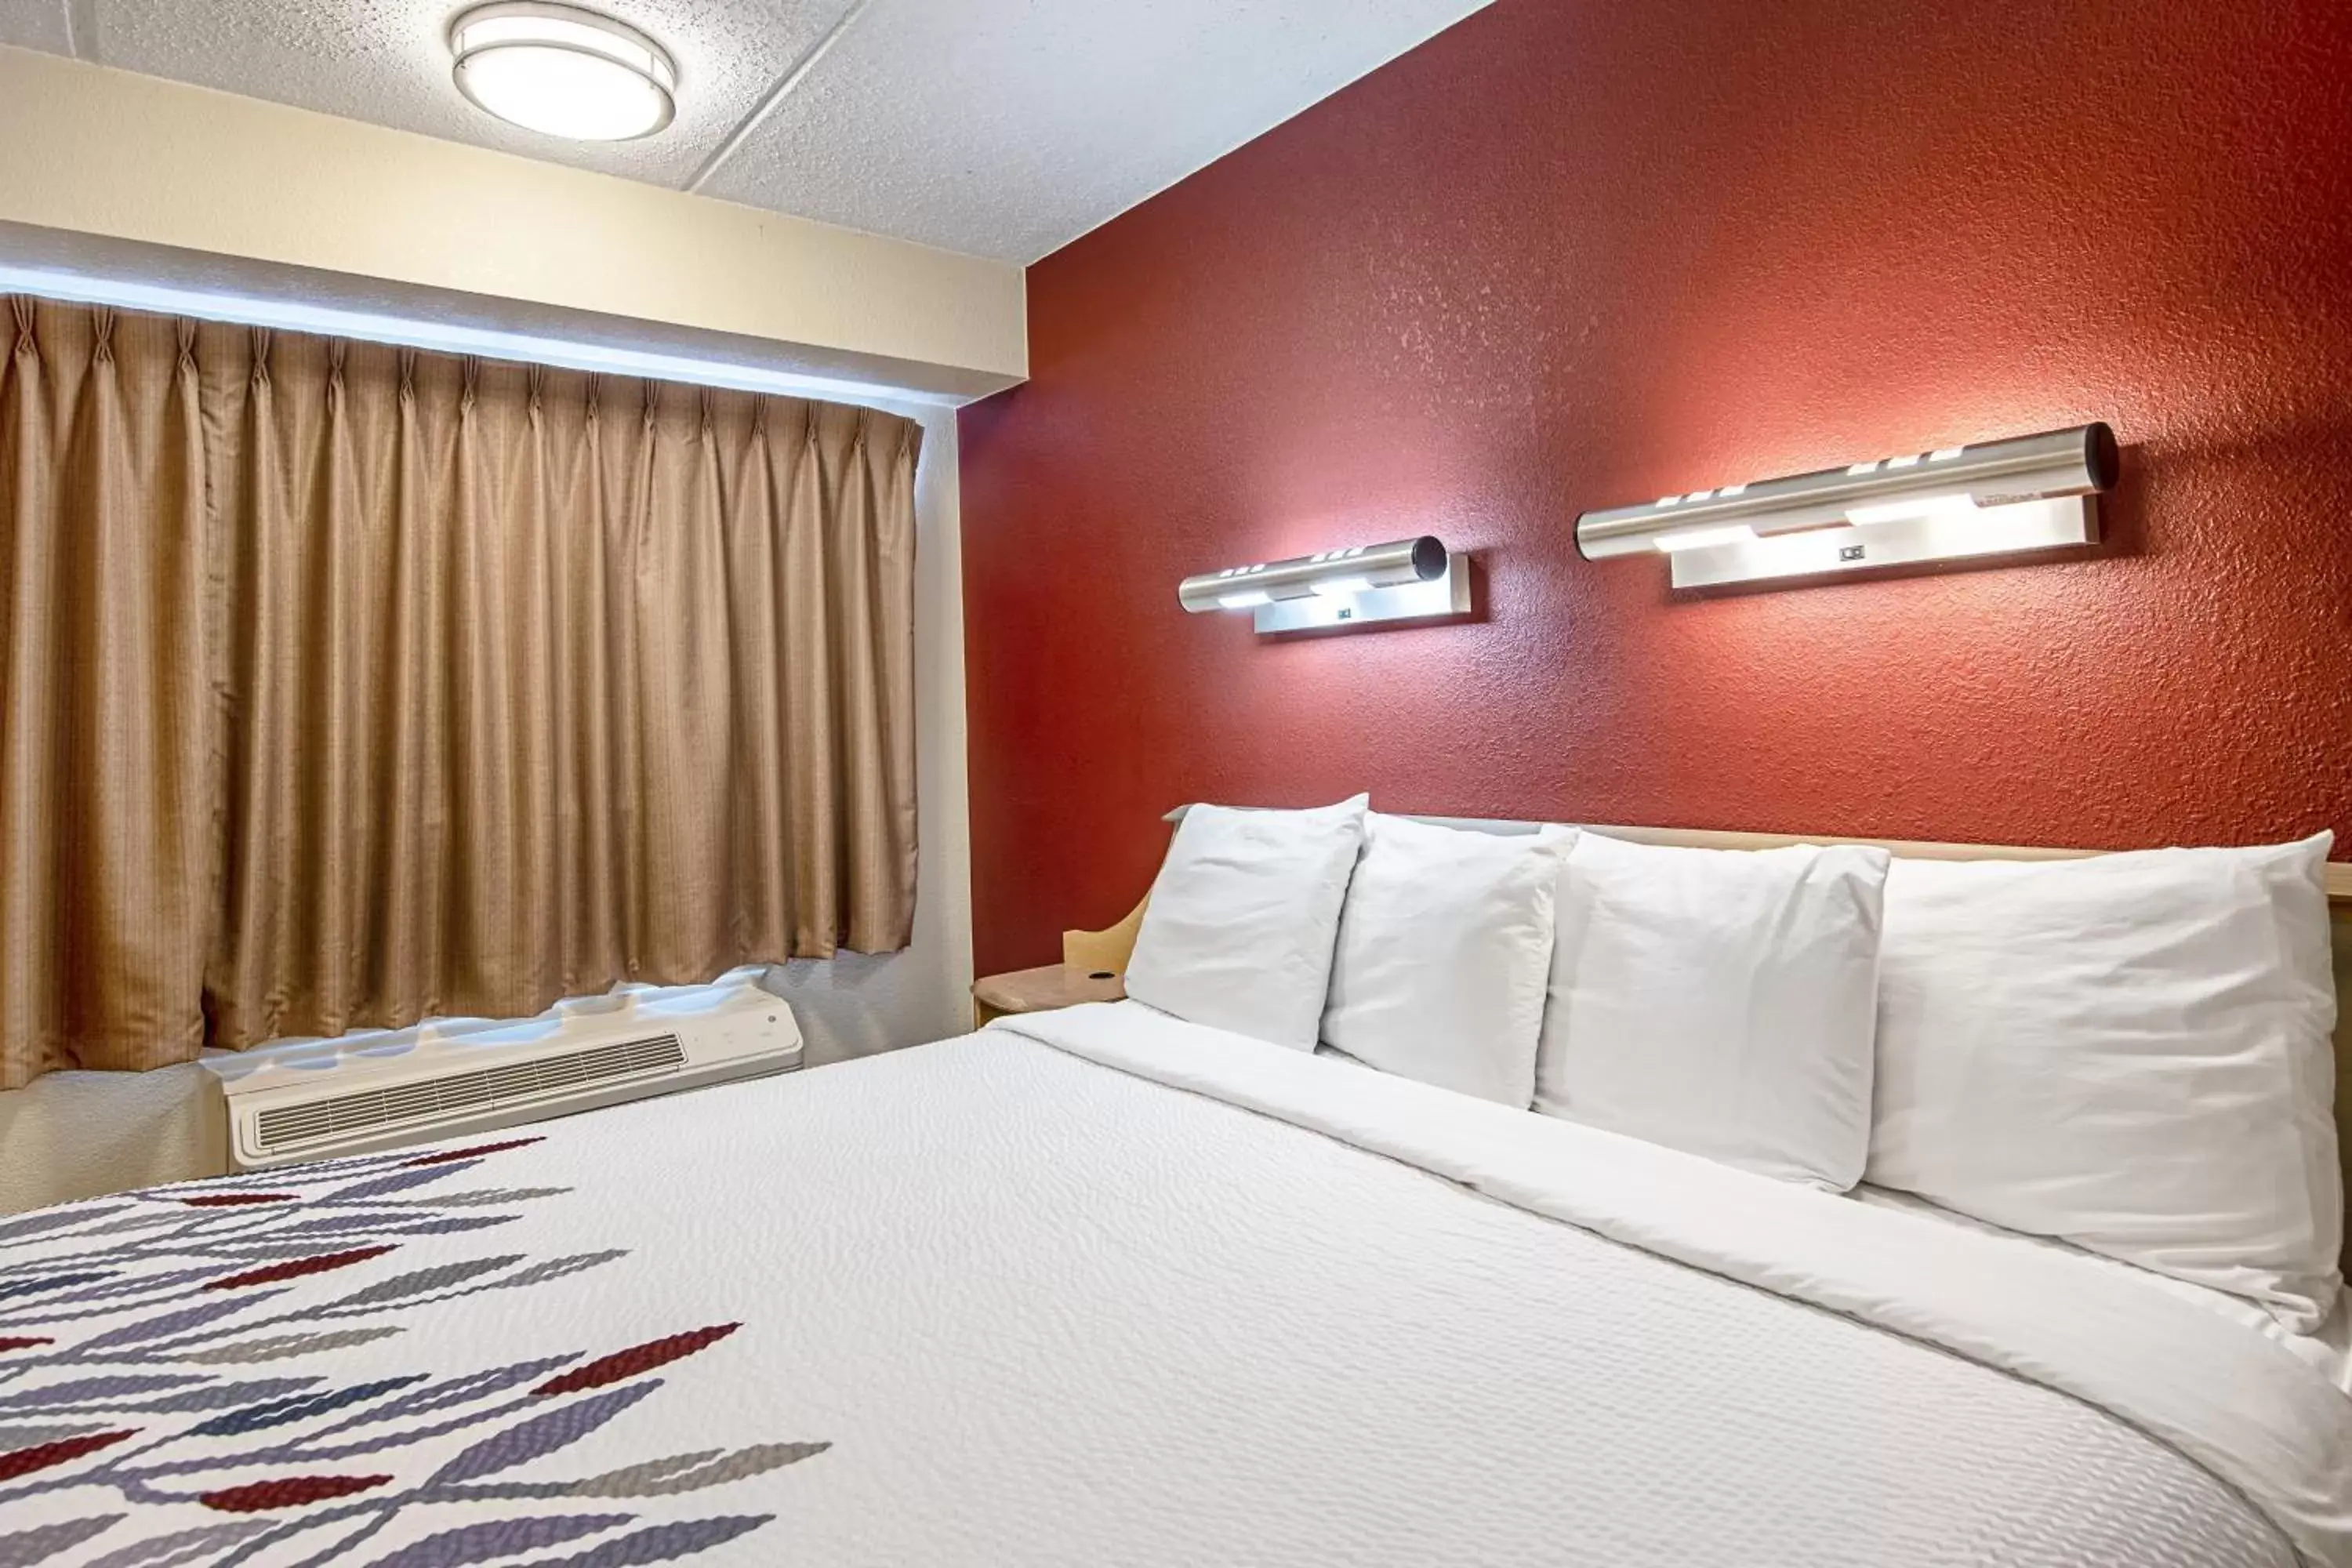 Bedroom, Bed in Red Roof Inn Hilton Head Island